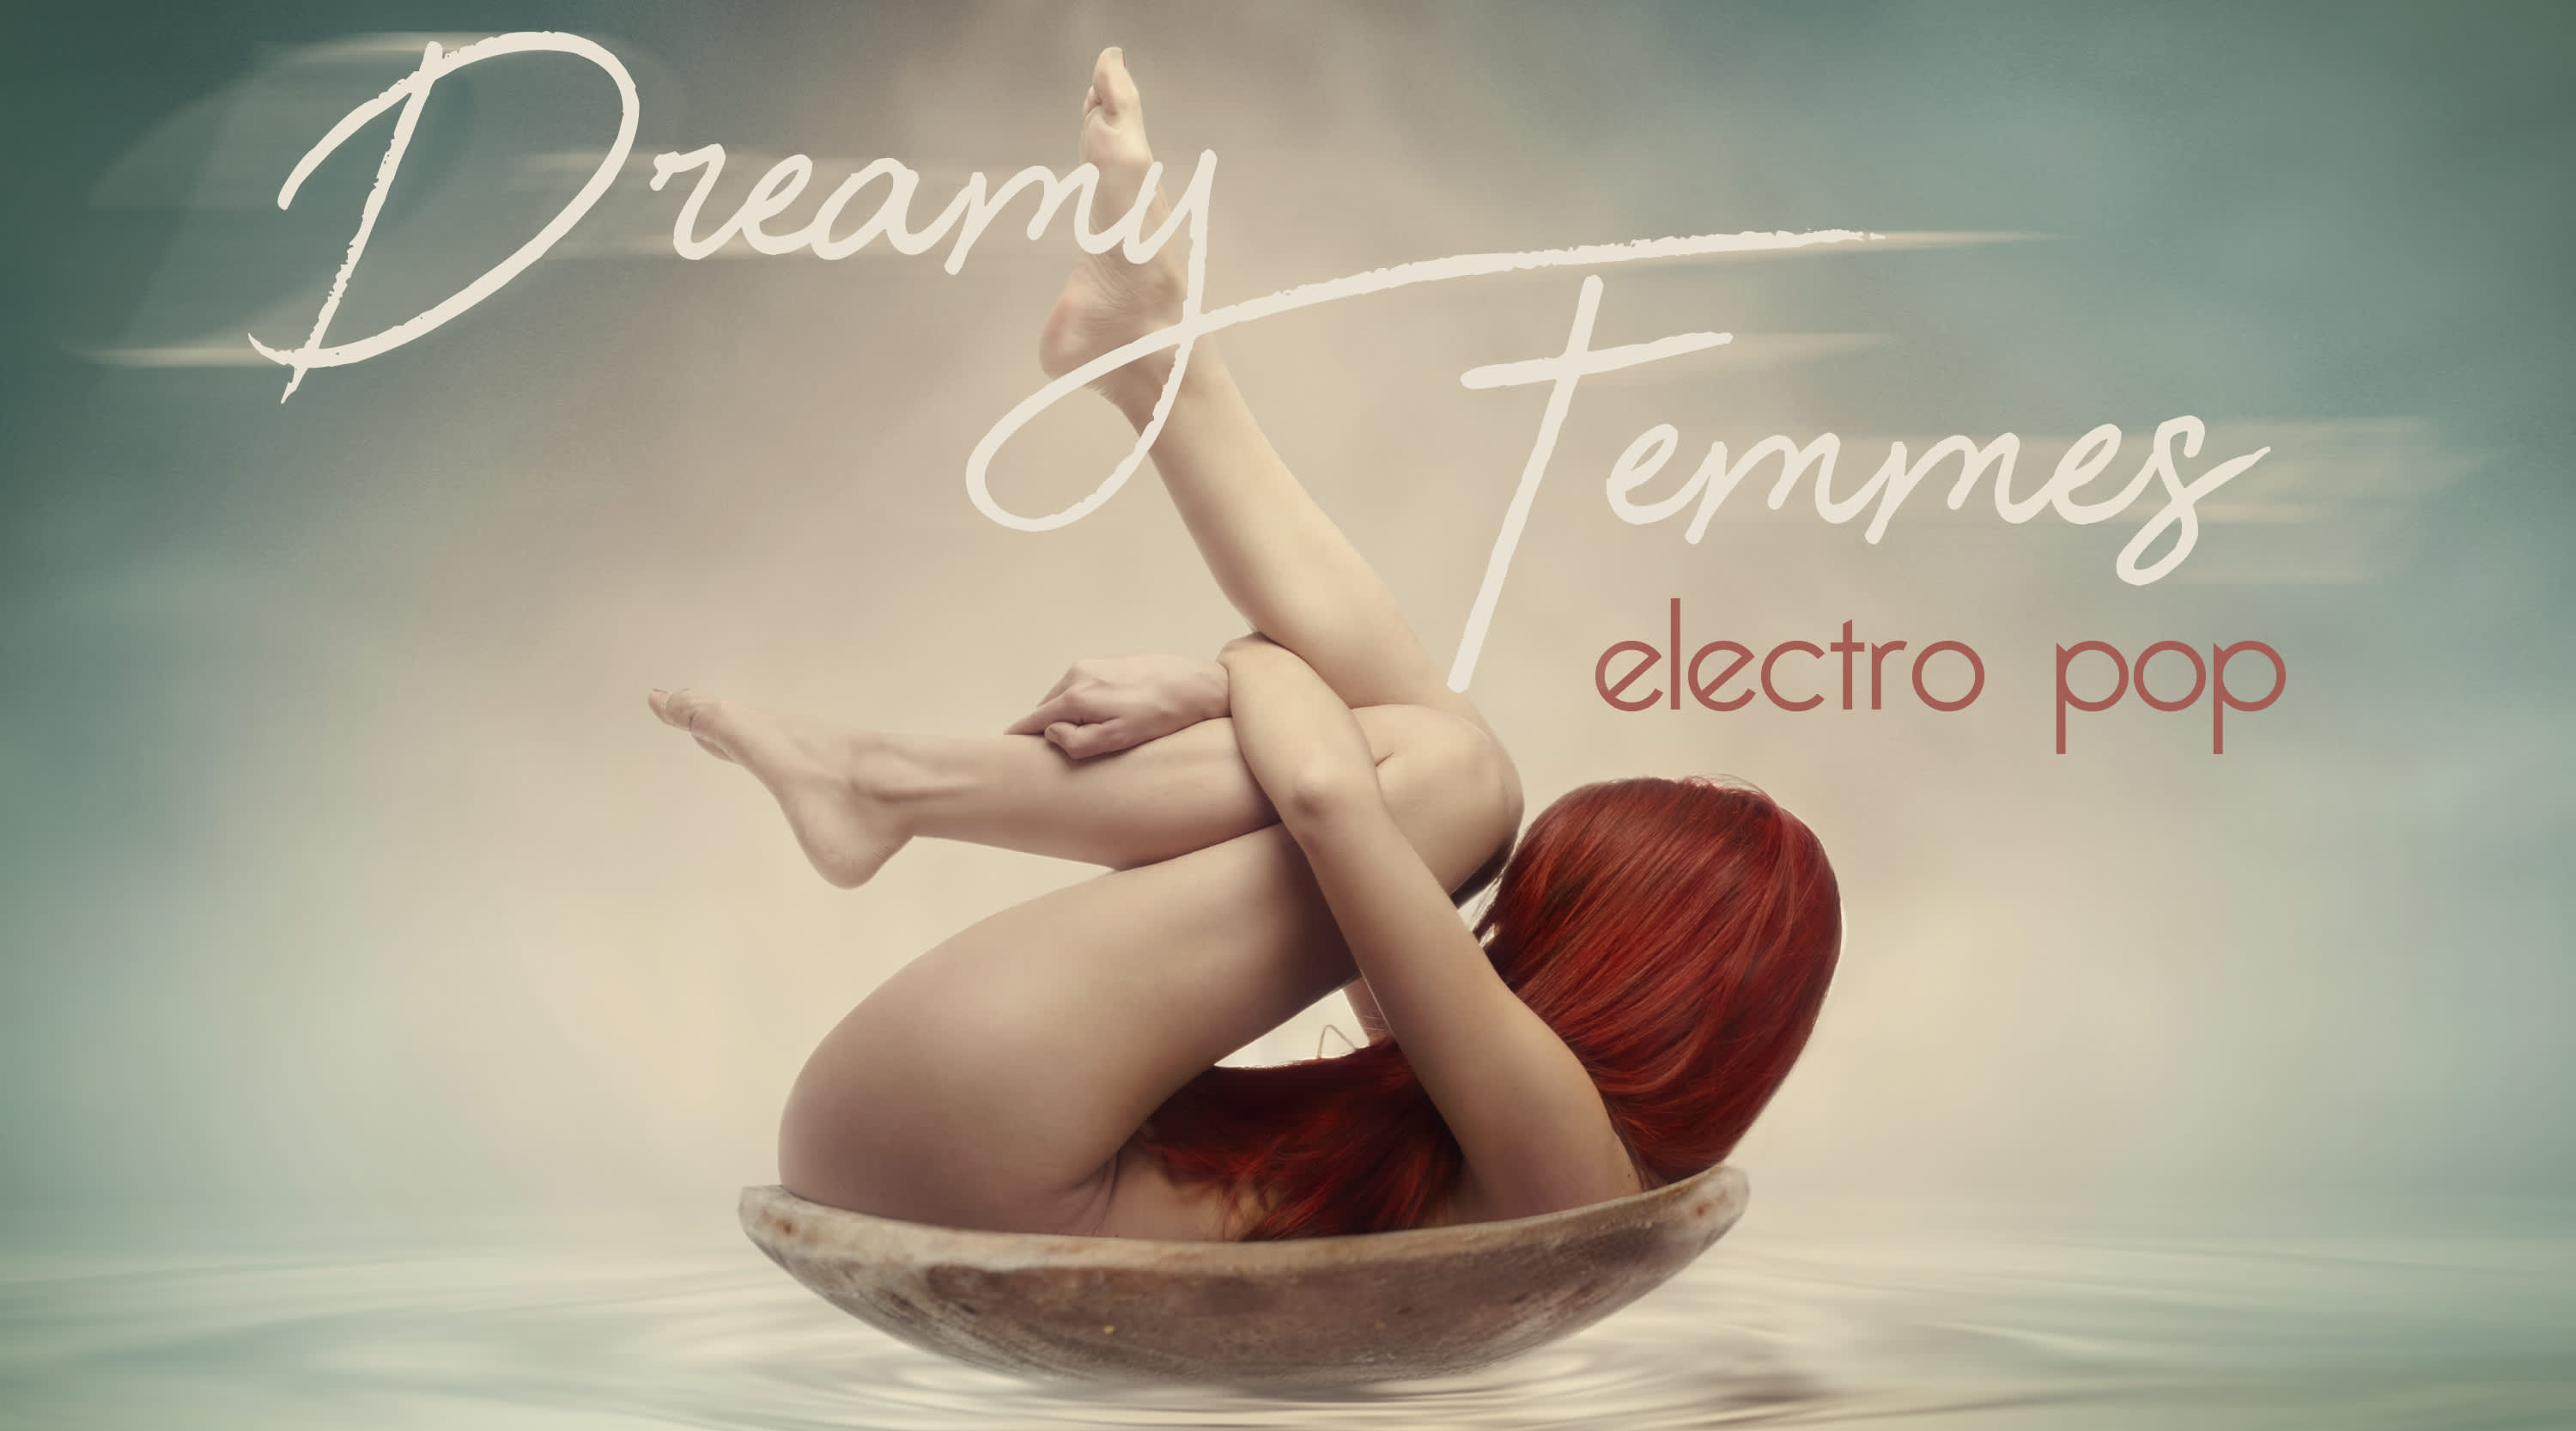 Dreamy Femme Pop